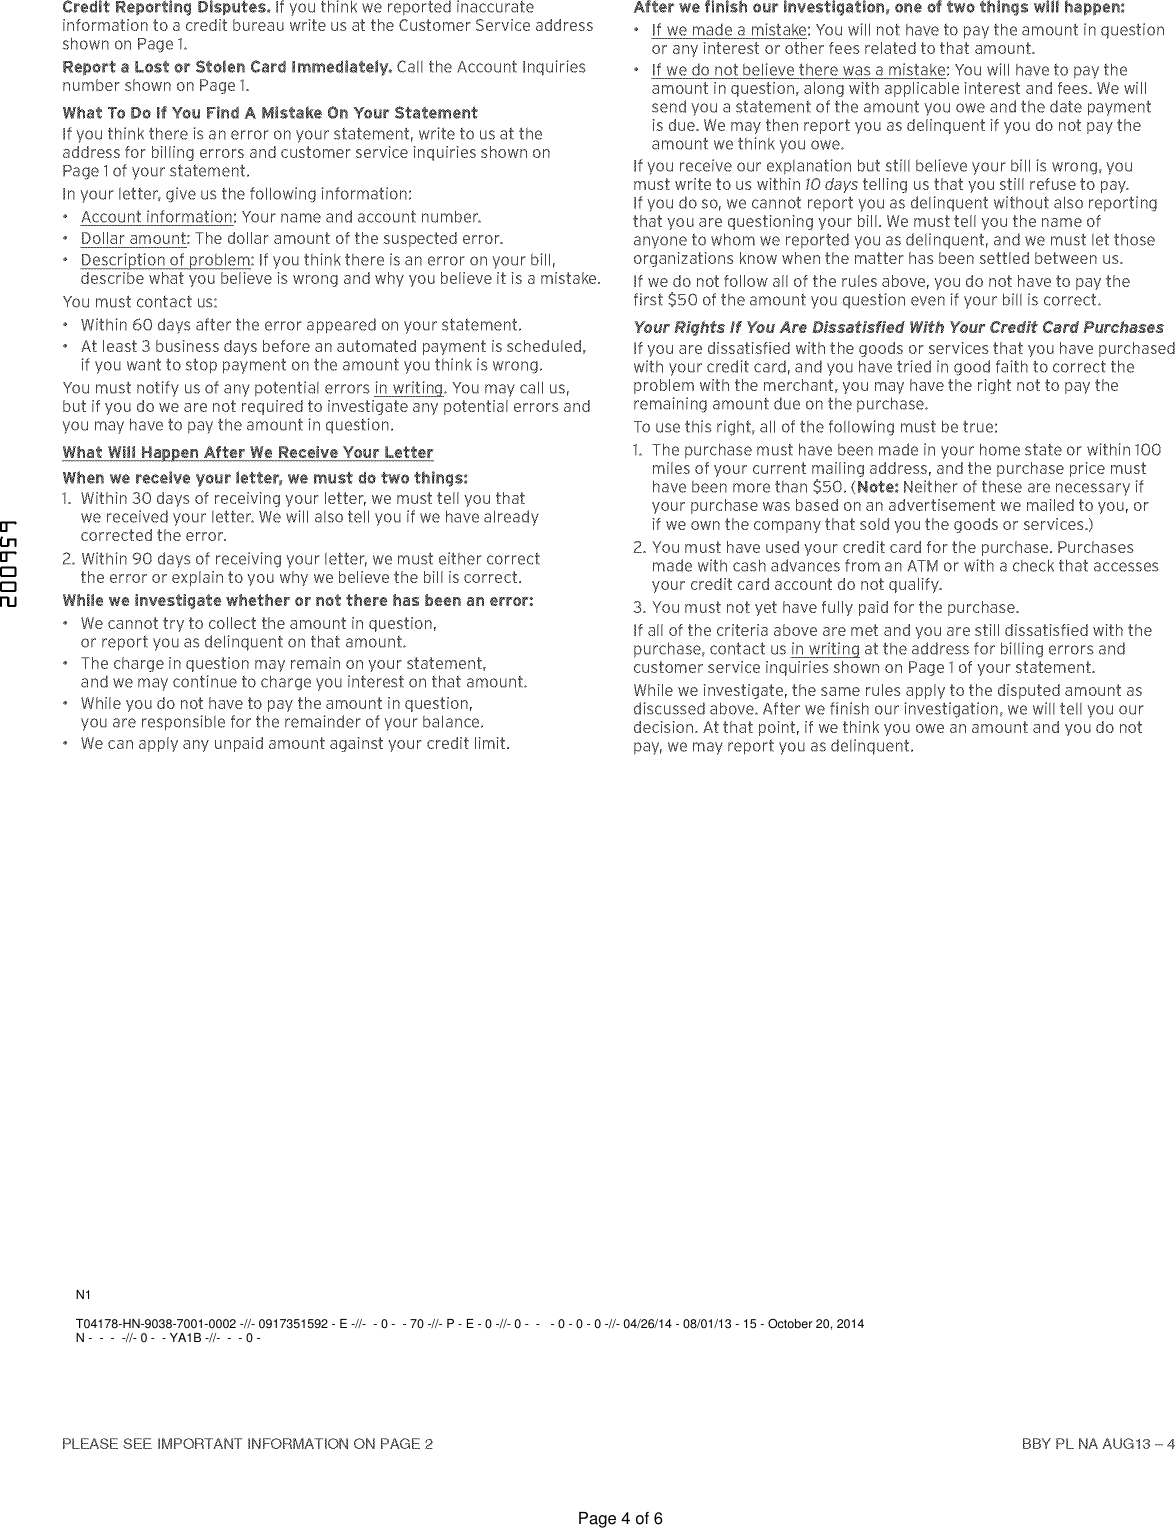 Page 4 of 6 - PDF Statement  11-19-2014